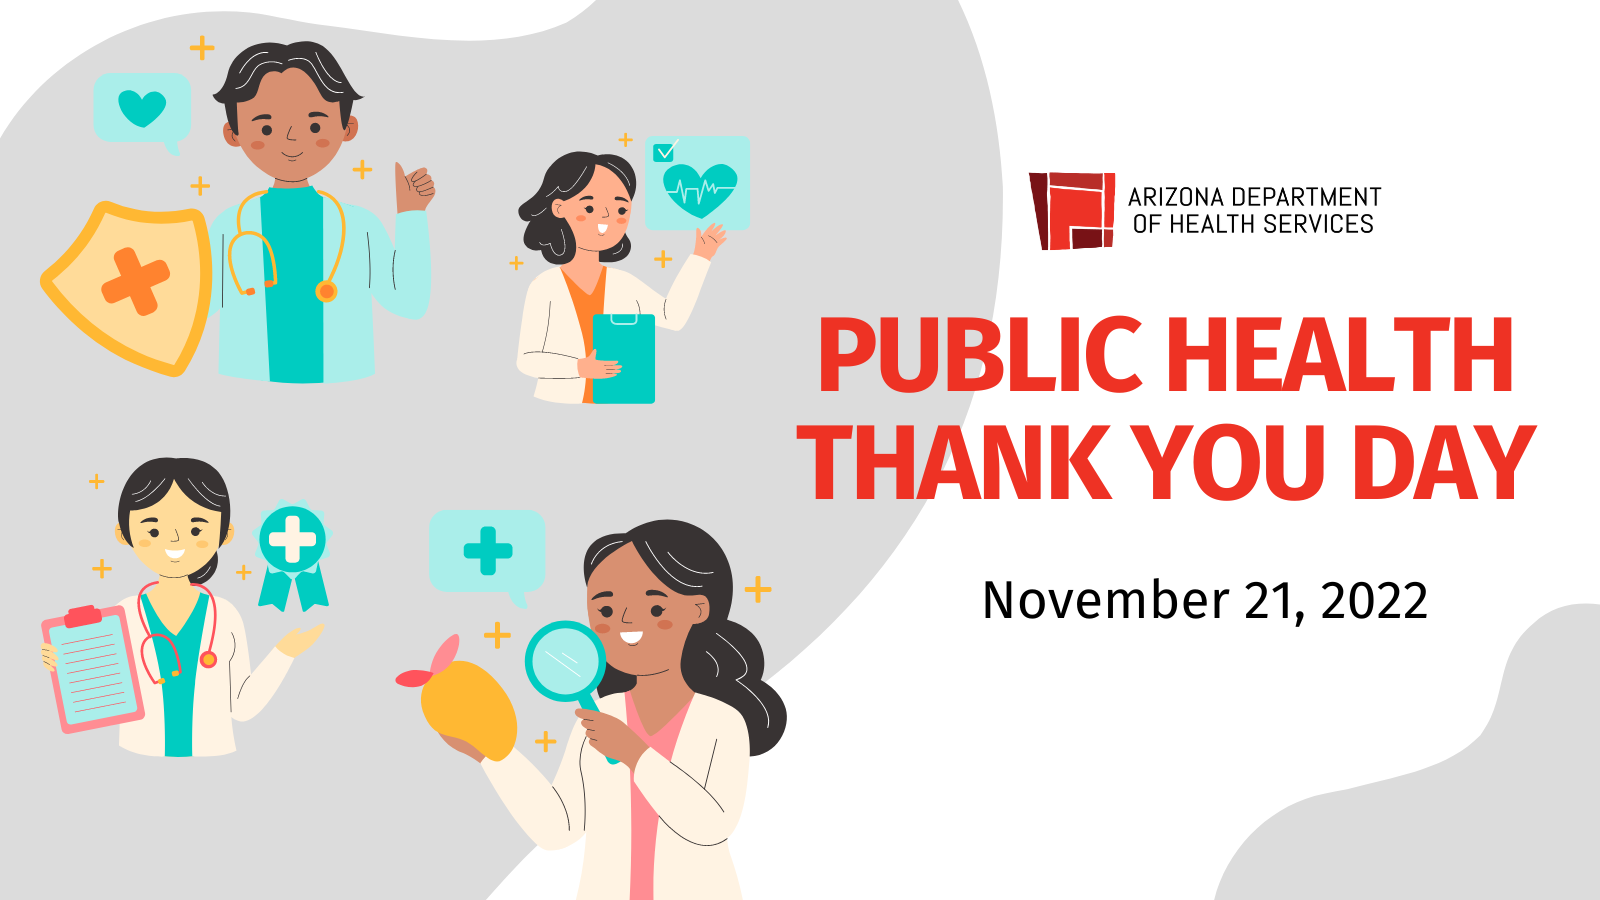 On Public Health Thank You Day, we thank Arizonans AZ Dept. of Health